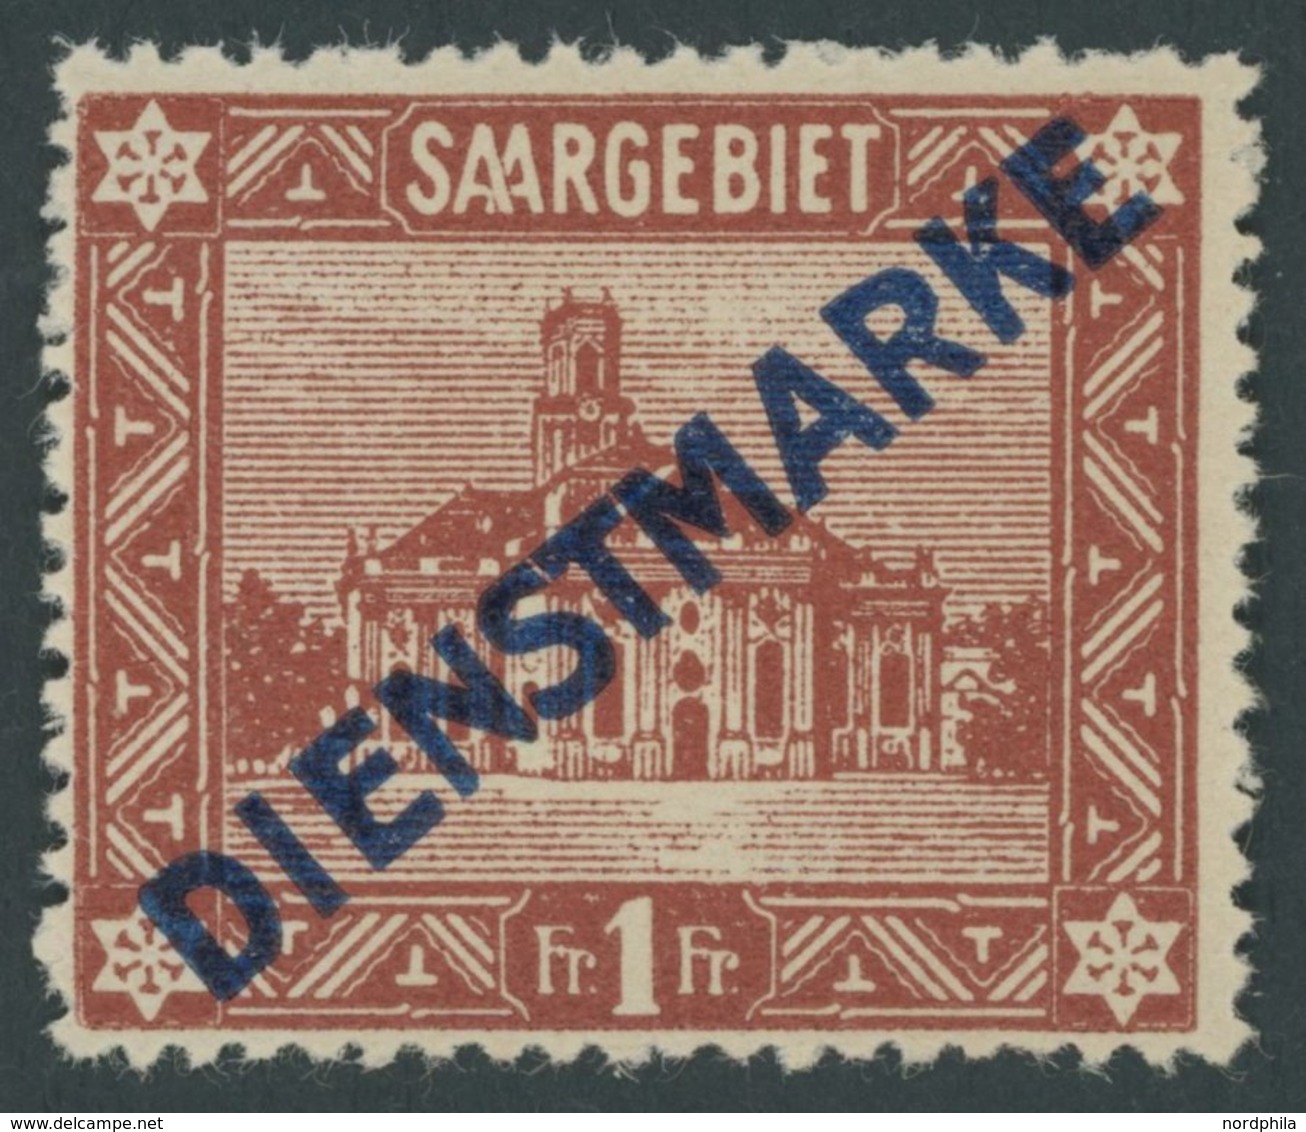 SAARGEBIET D 11I **, 1922, 1 Fr. Ludwigskirche, Type I, Postfrisch, Pracht, Mi. 180.- - Oficiales